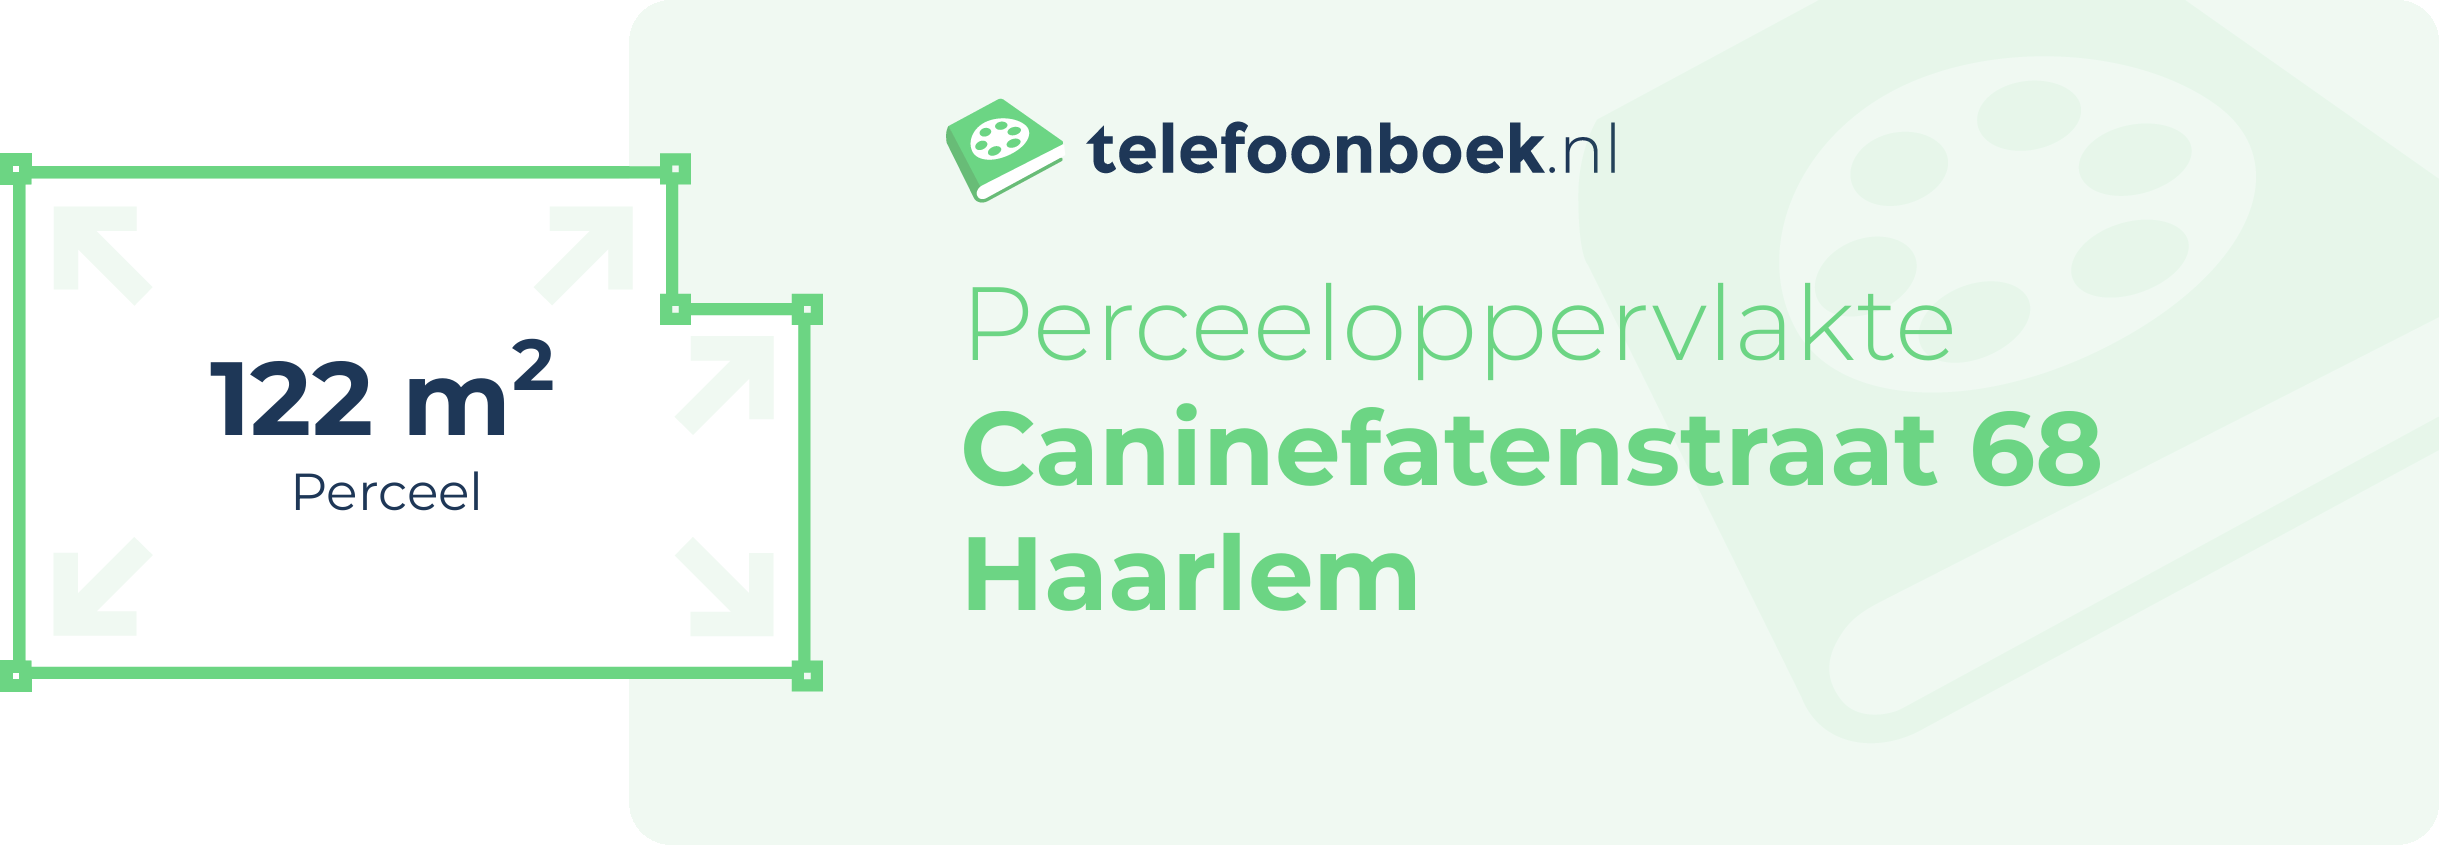 Perceeloppervlakte Caninefatenstraat 68 Haarlem